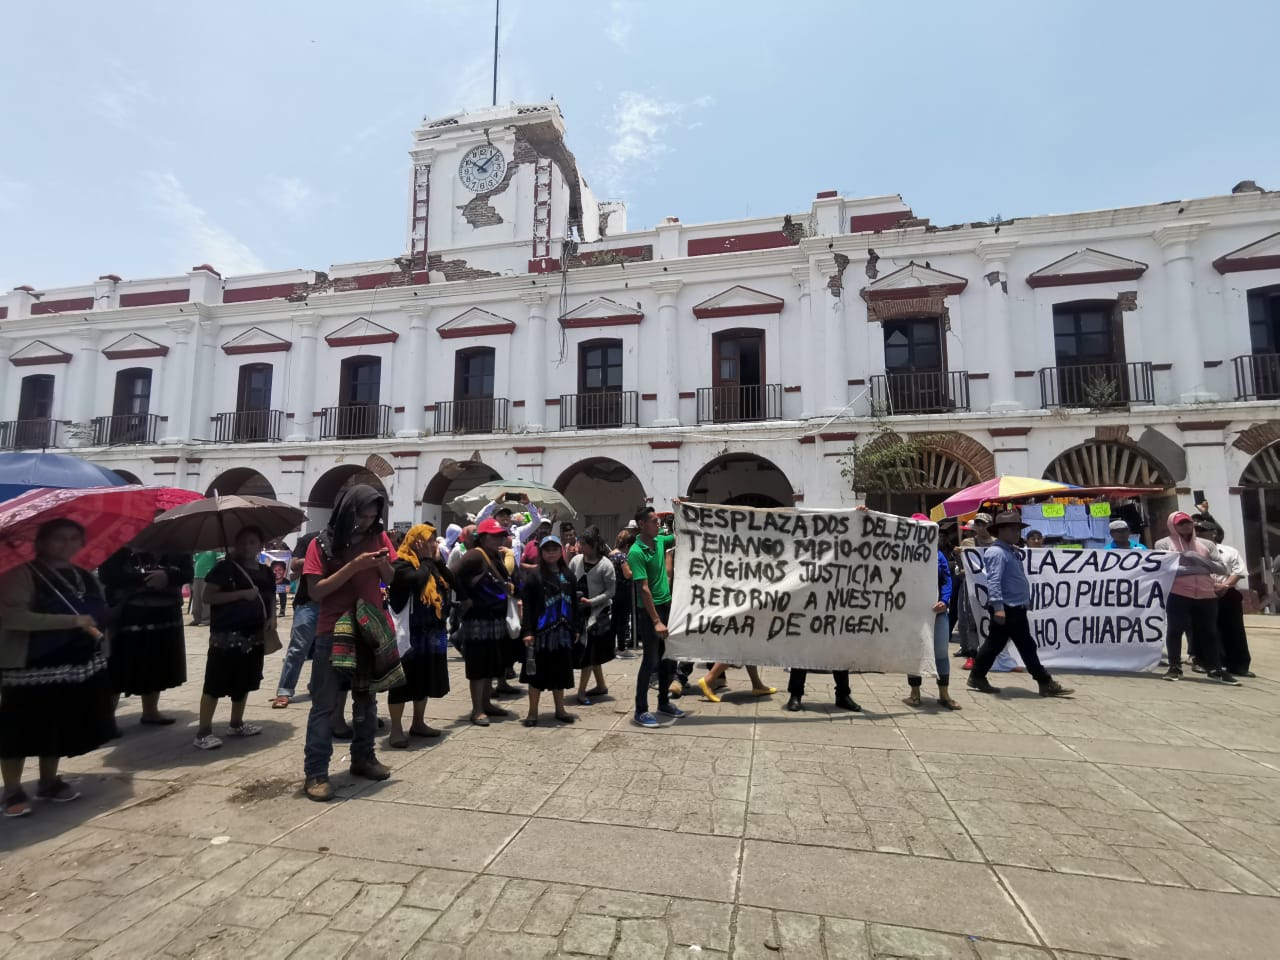 Desplazados chiapanecos recorren Oaxaca rumbo a CDMX, piden justicia